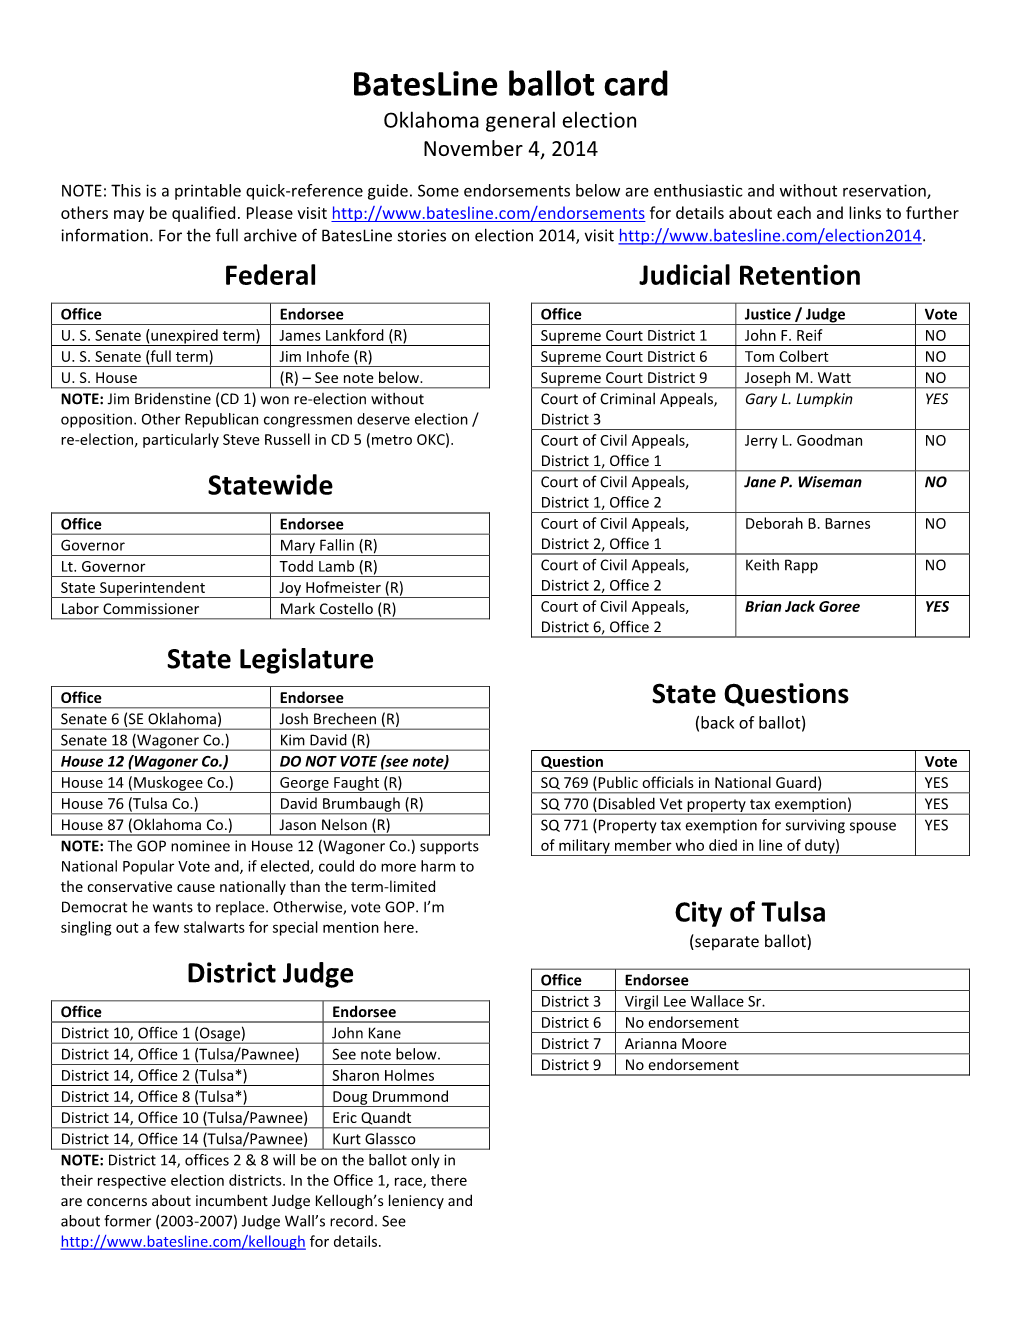 Batesline Ballot Card, 2014 Oklahoma General Election